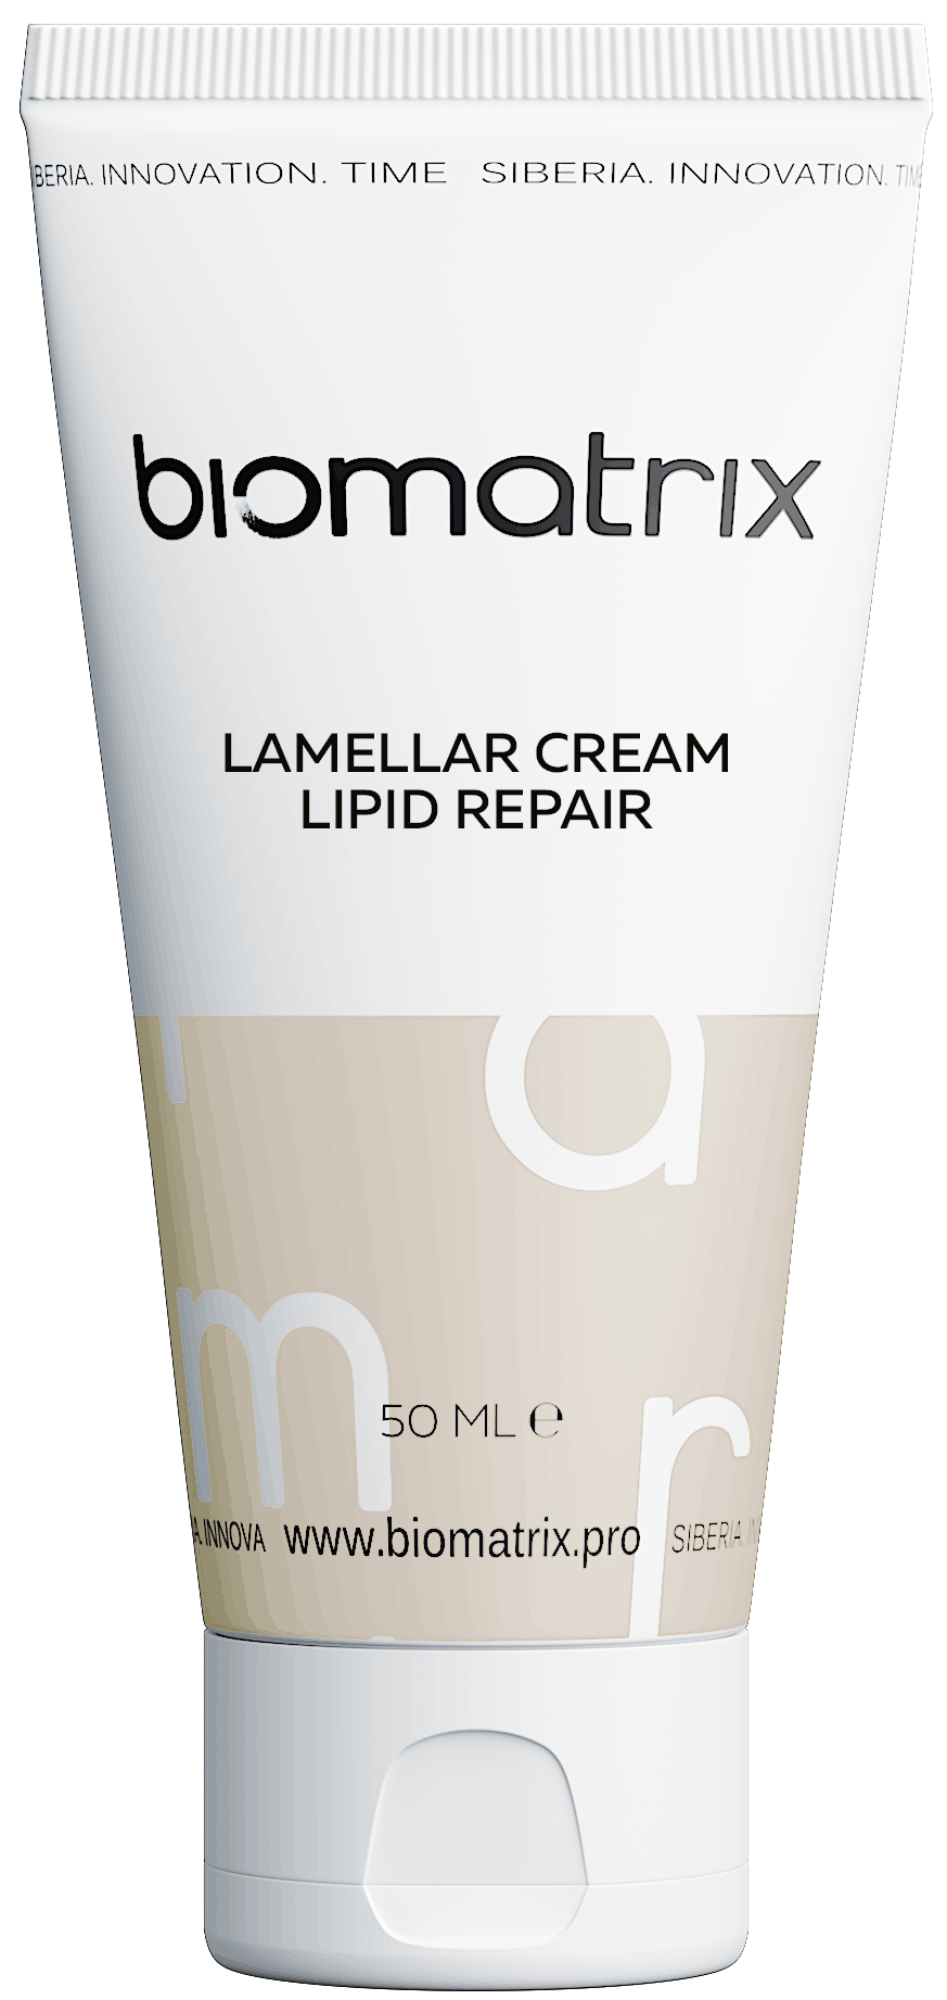 Lamellar cream lipid repair